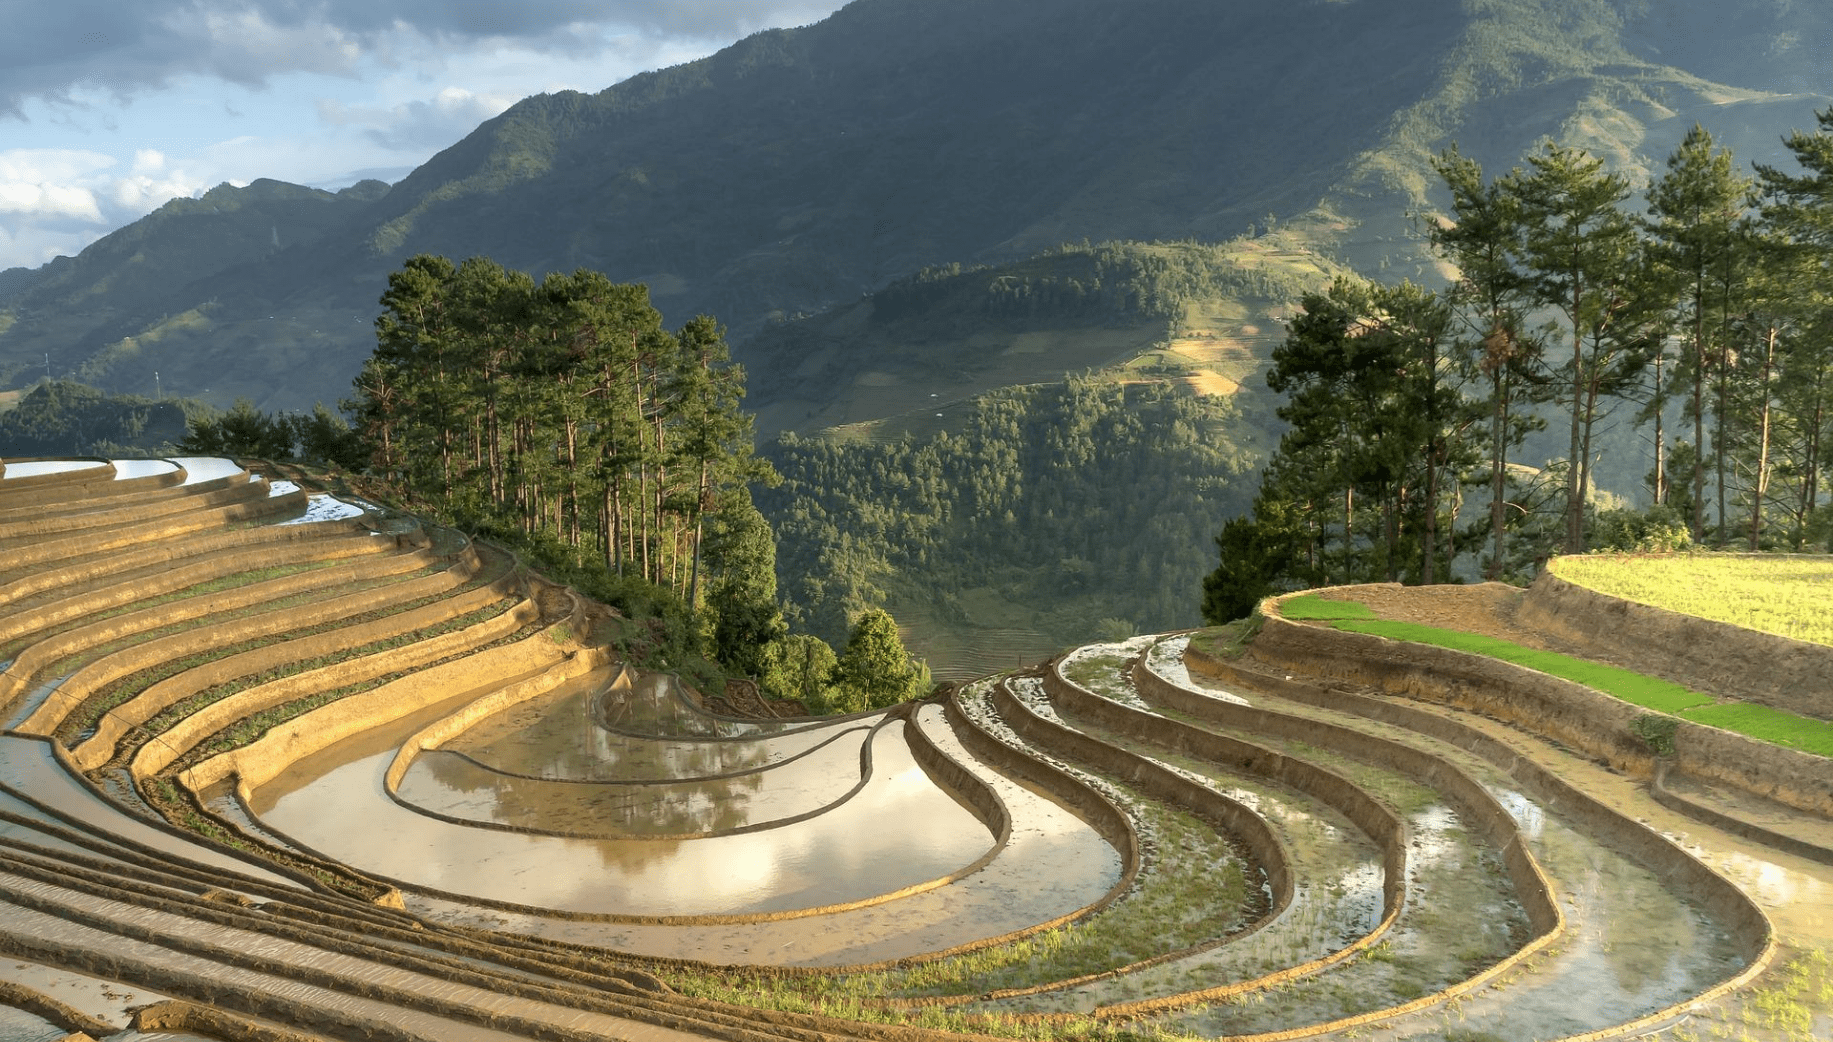 Stone terrace farming in Meghalaya